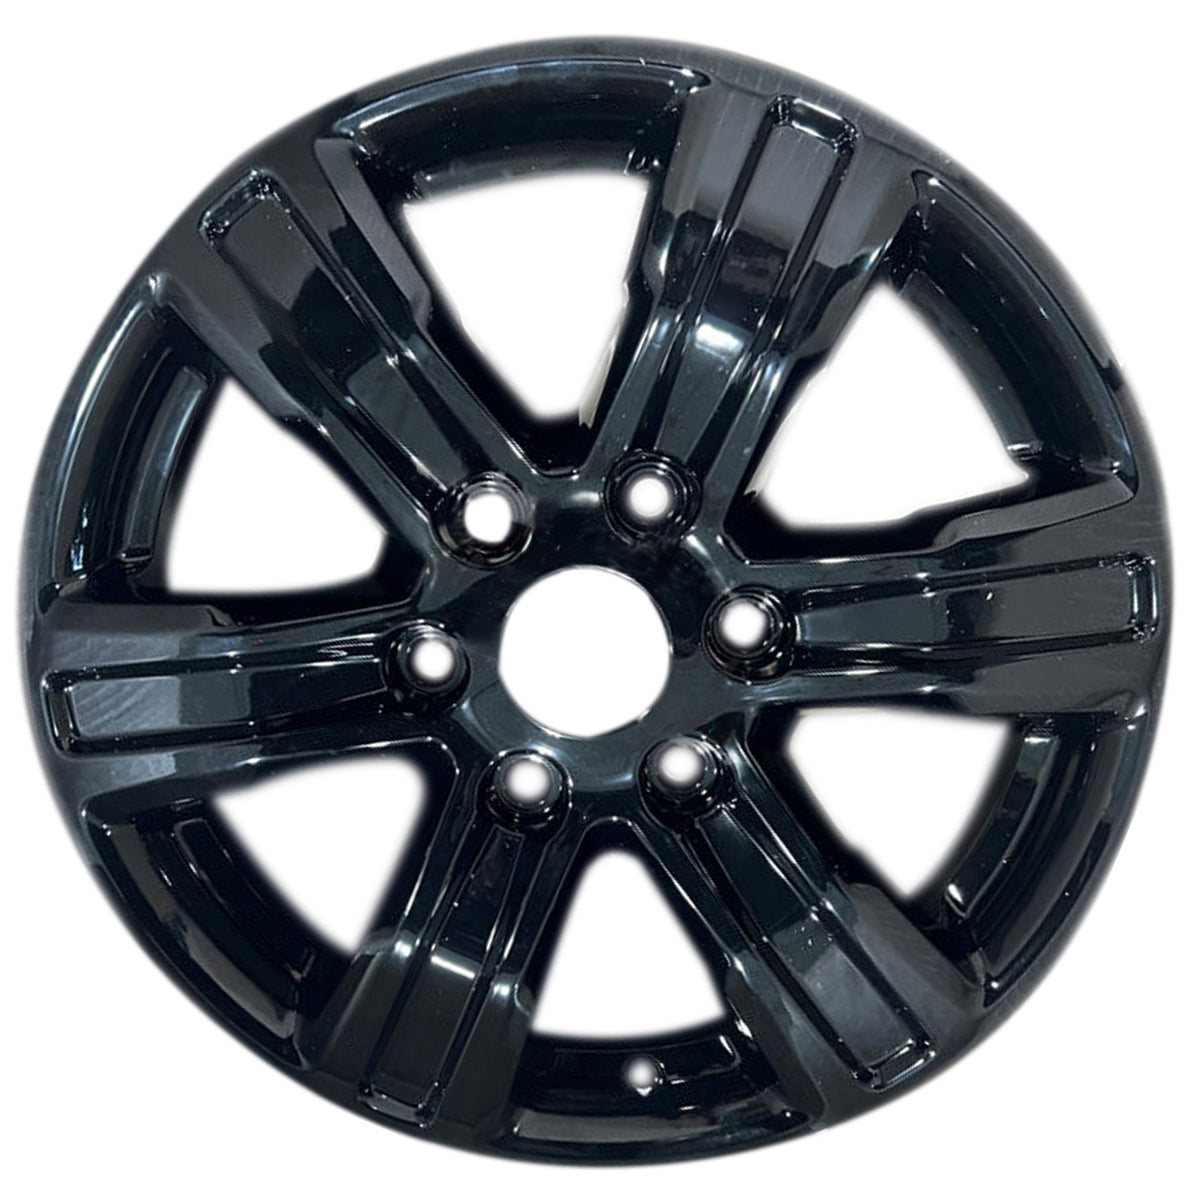 2021 Ford Ranger 17" OEM Wheel Rim Black W10228B